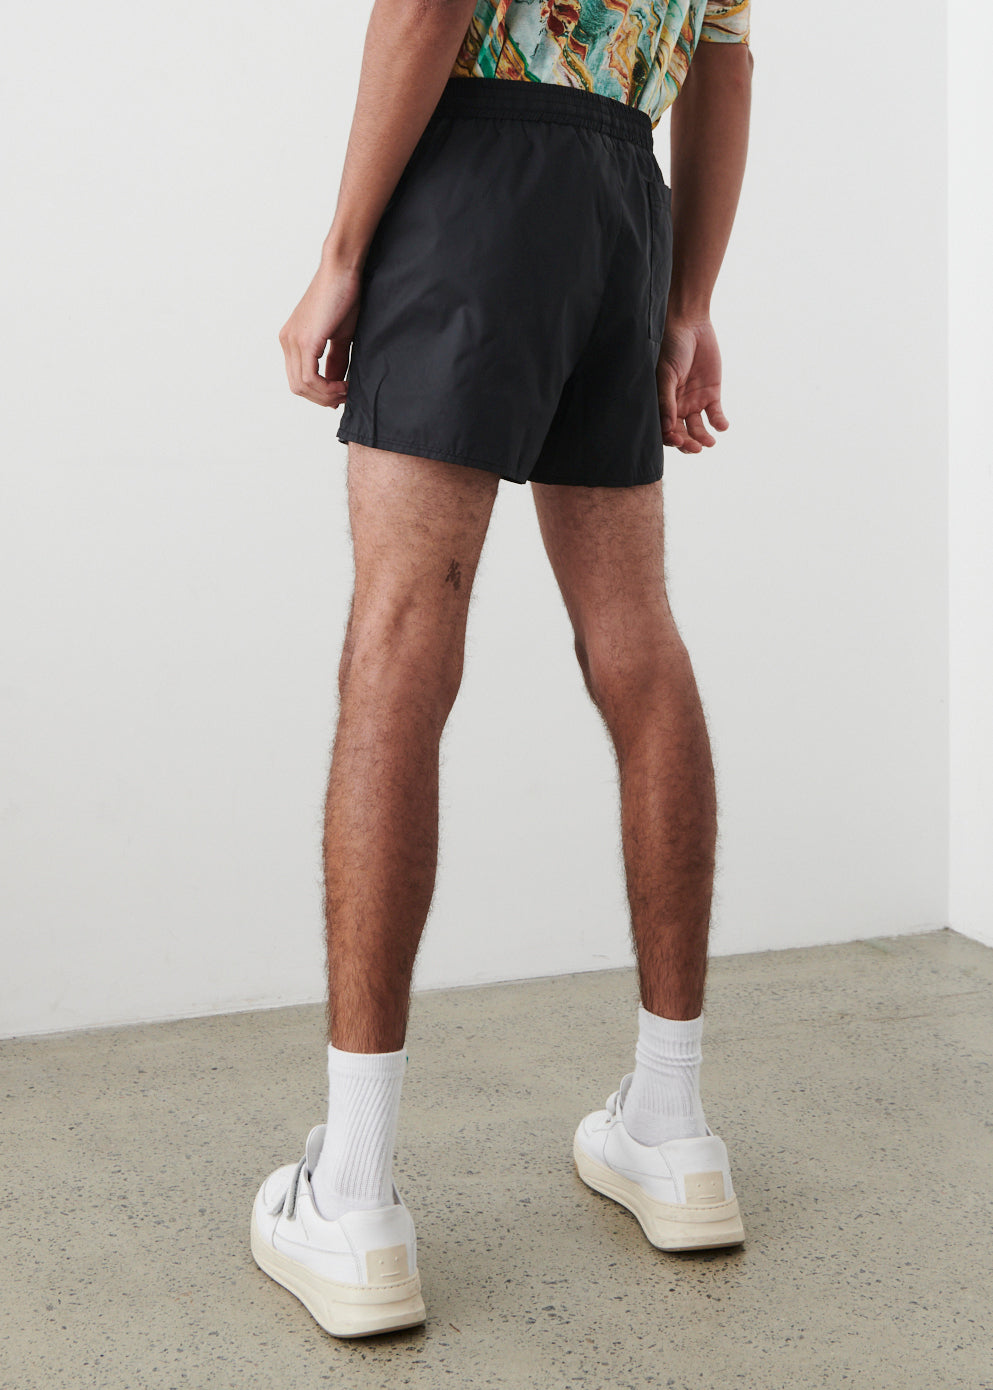 Wigel Nylon Shorts